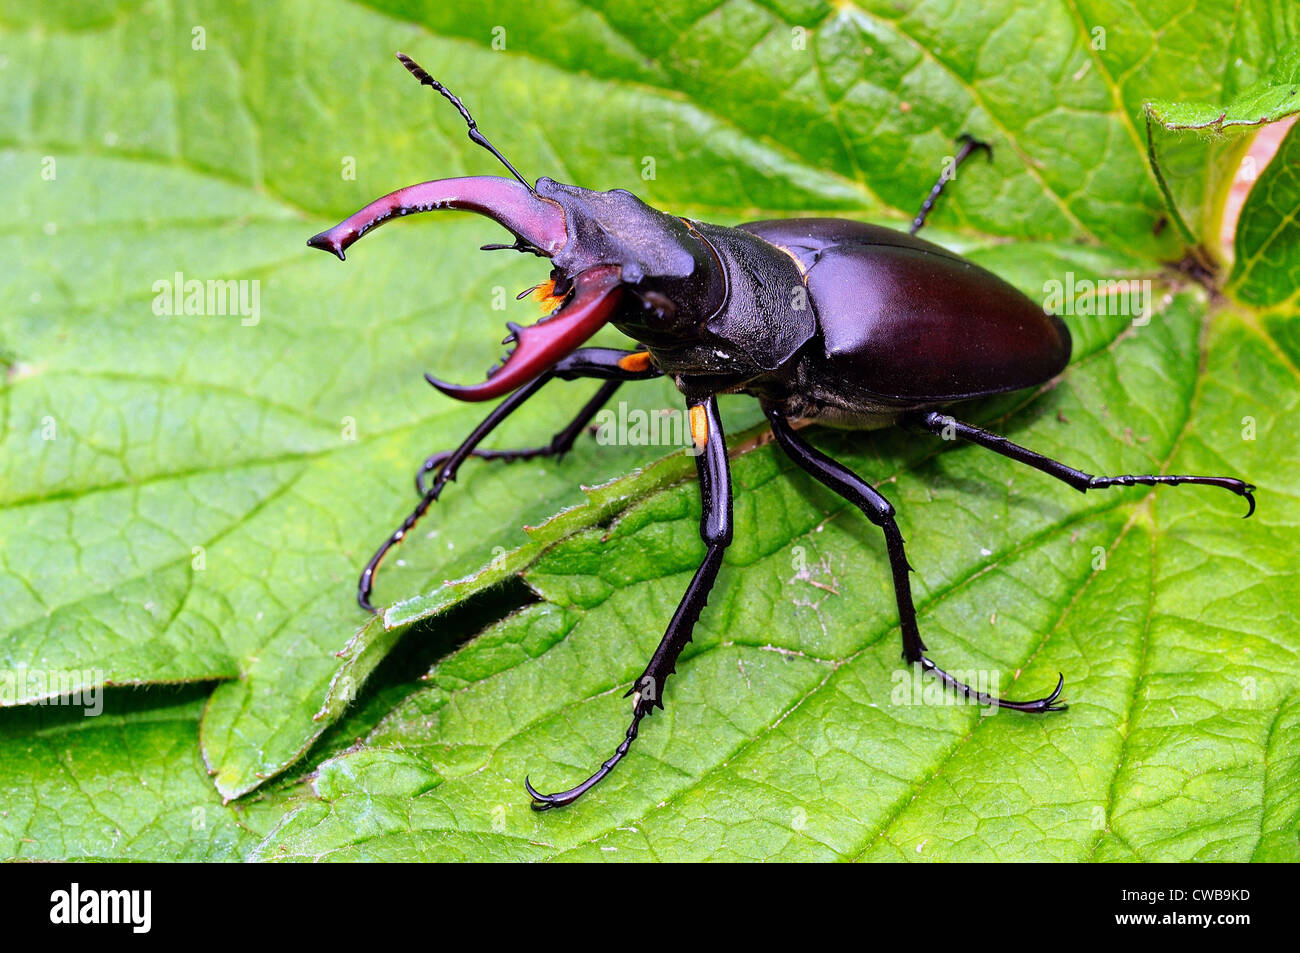 Close up of British stag beetle sur feuille verte Banque D'Images